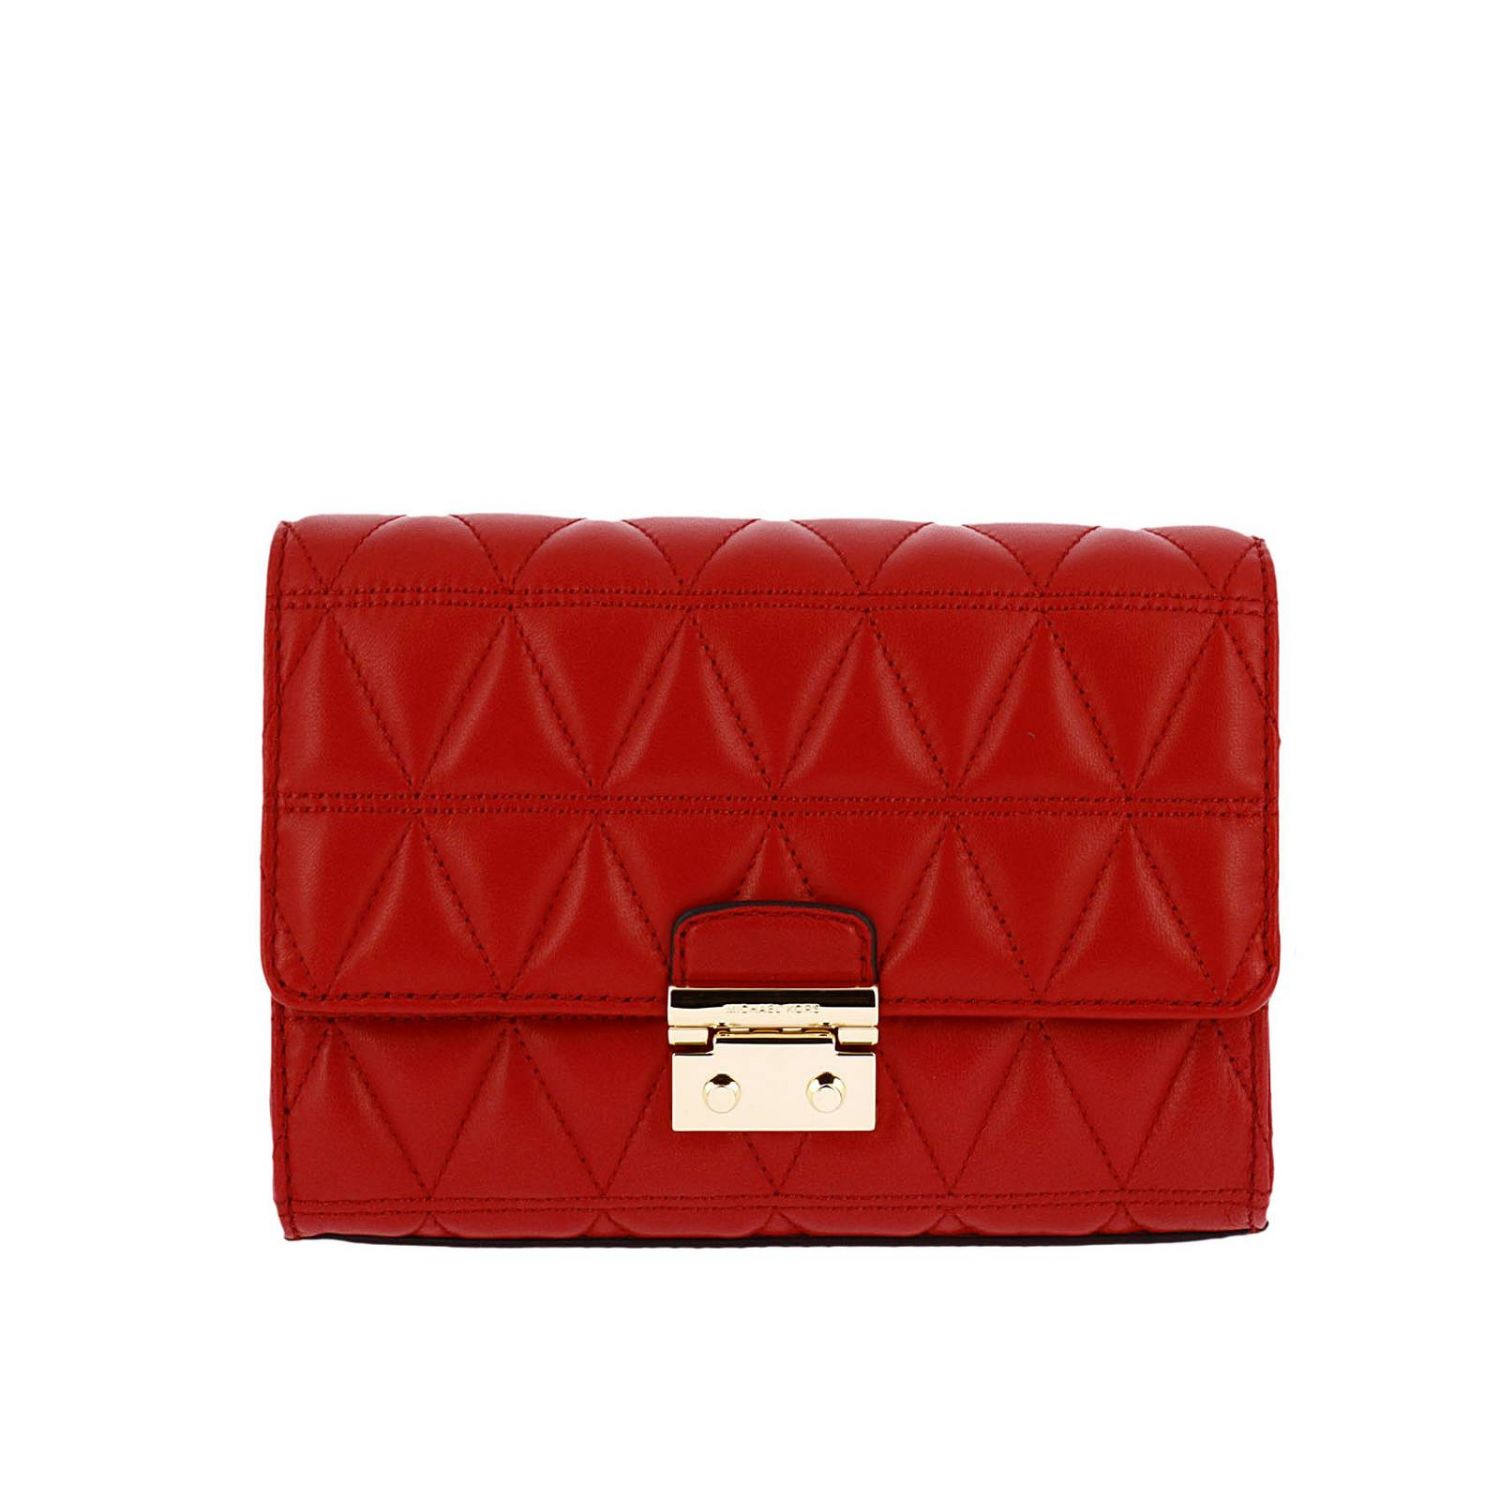 Michael Michael Kors Outlet: Shoulder bag women - Red | Mini Bag ...